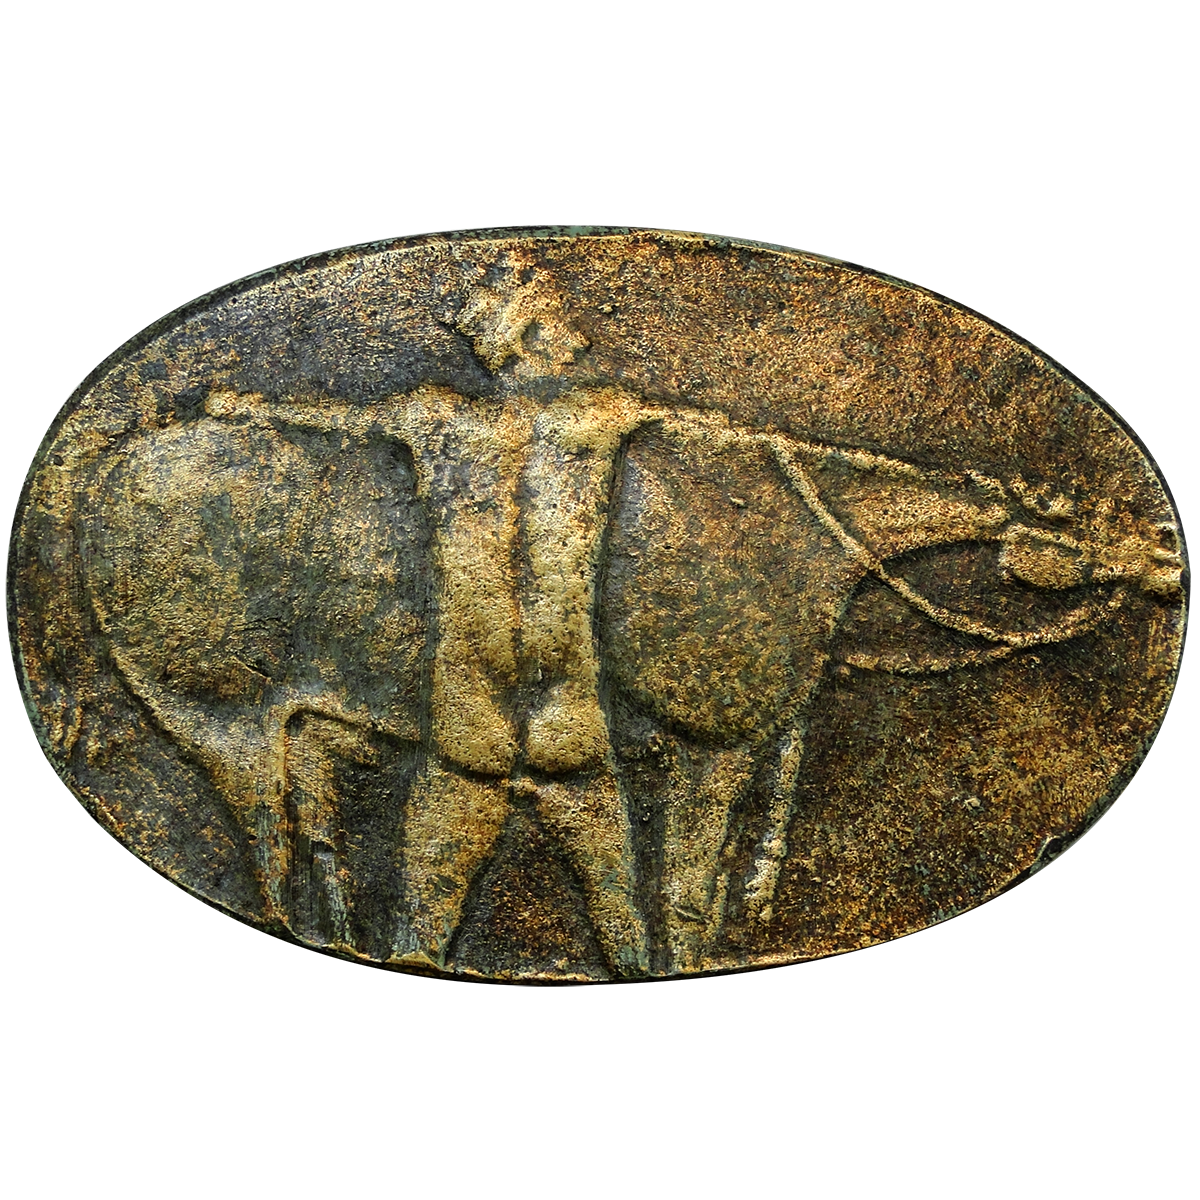 8796 - Vasco Prado, bronze, 7 x 11,5 cm, ass. s.dt.